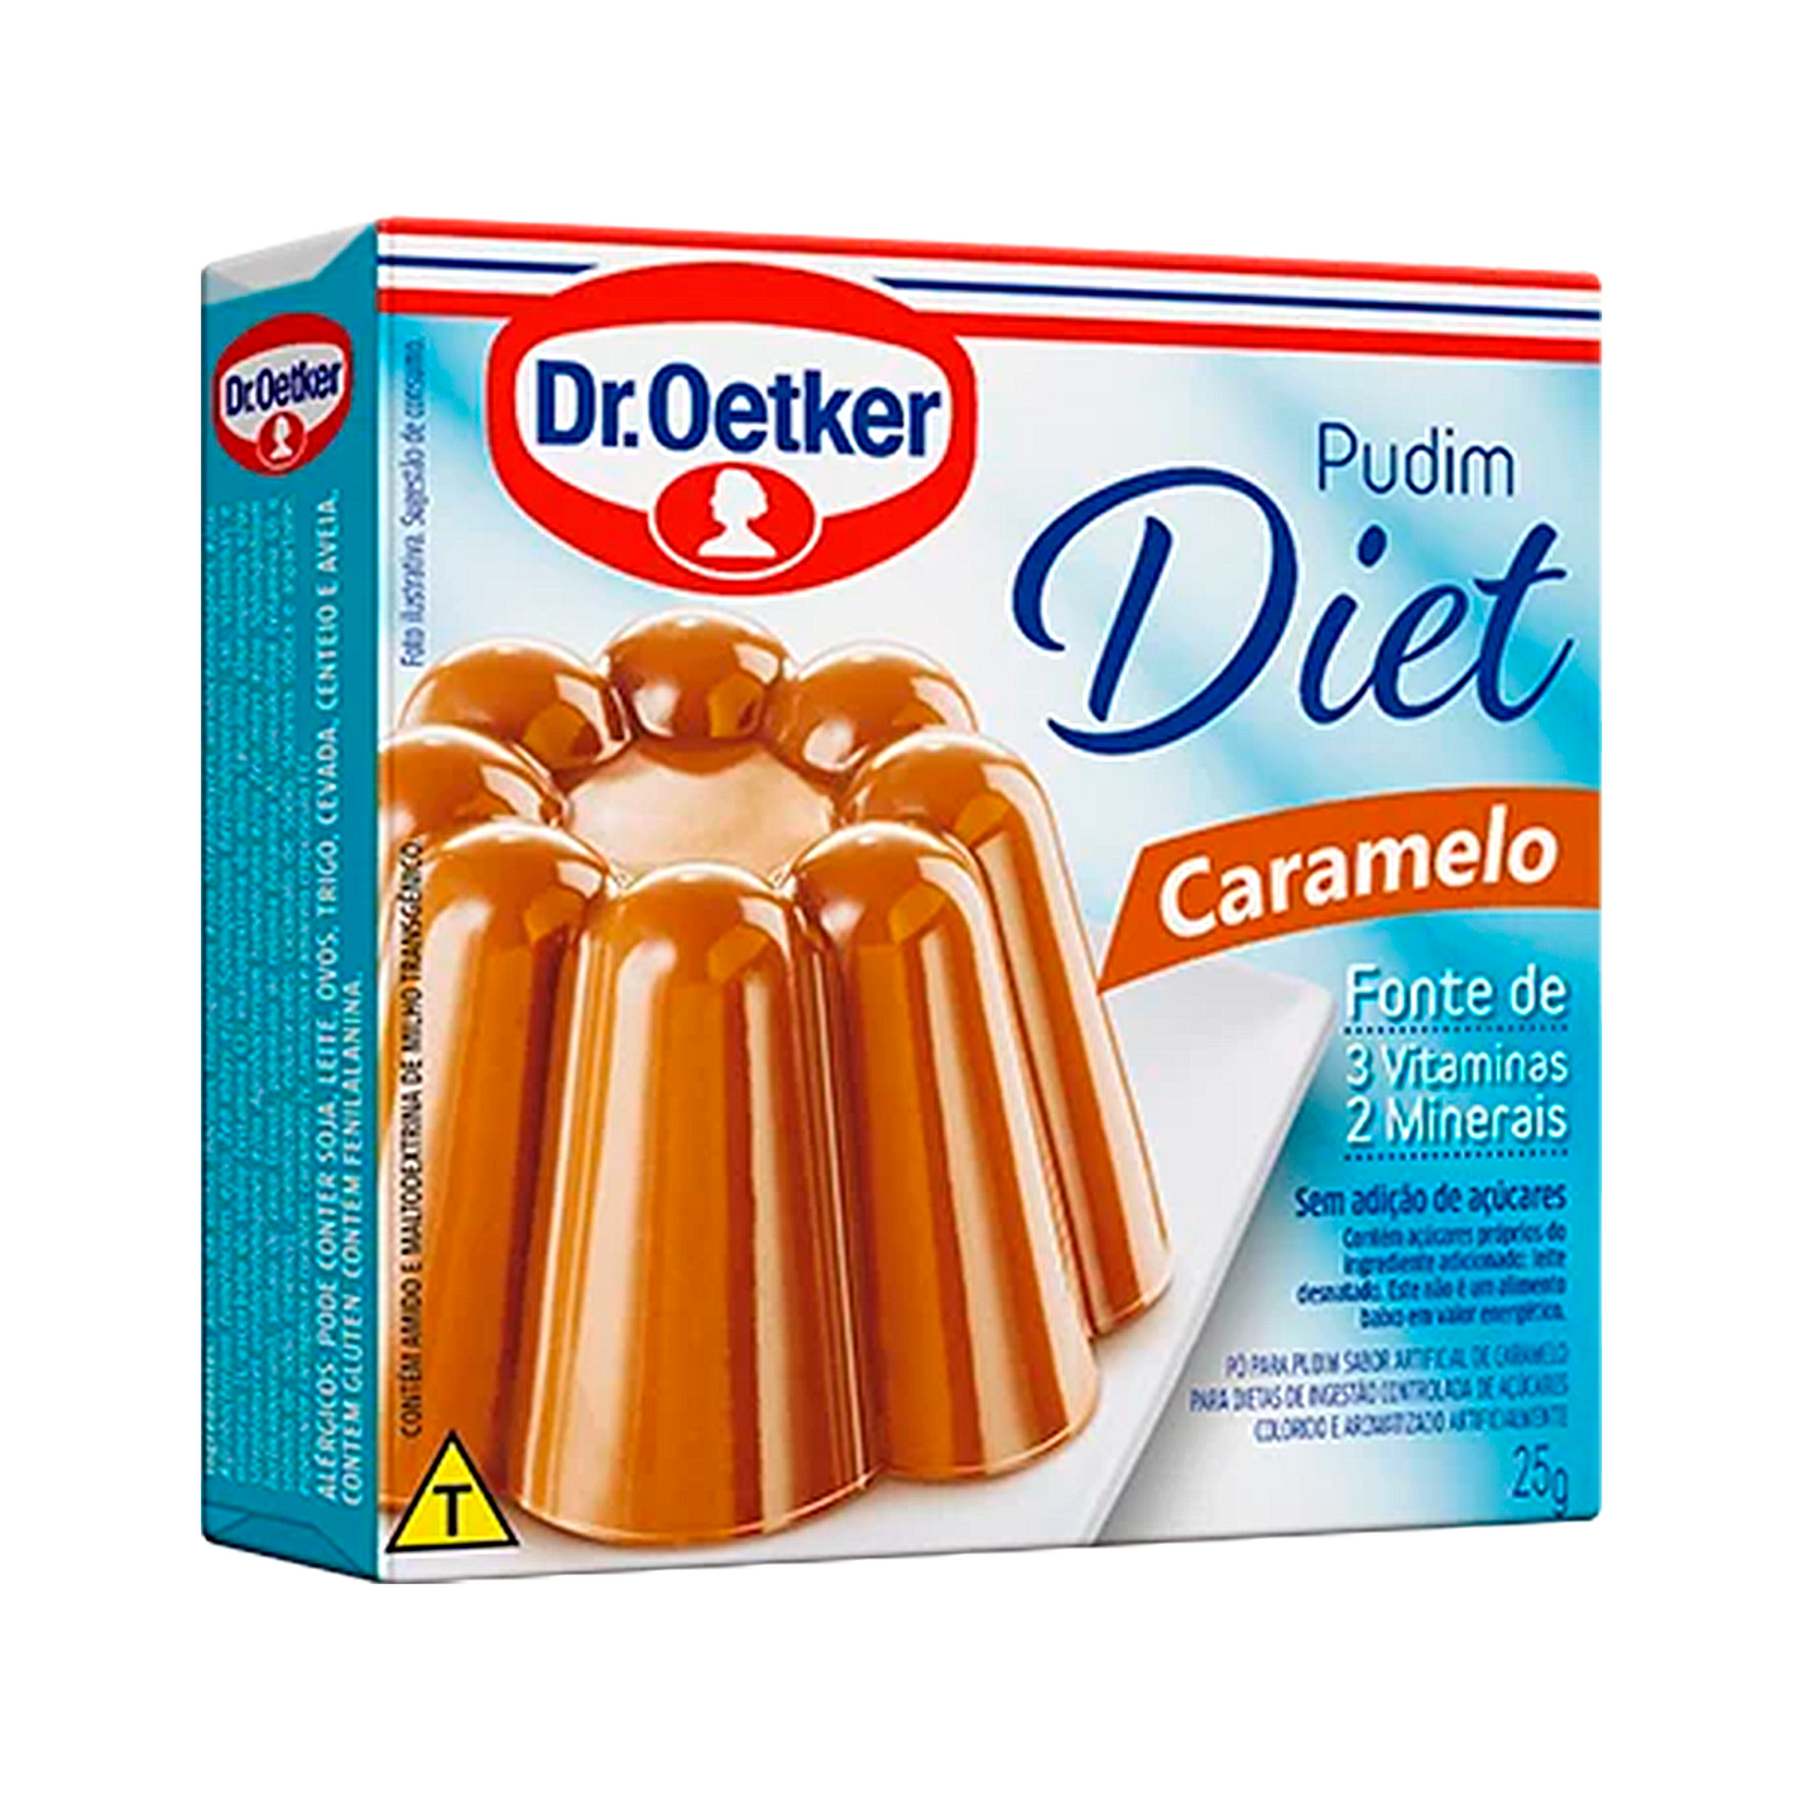 Pudim Diet de Caramelo Dr. Oetker 25g